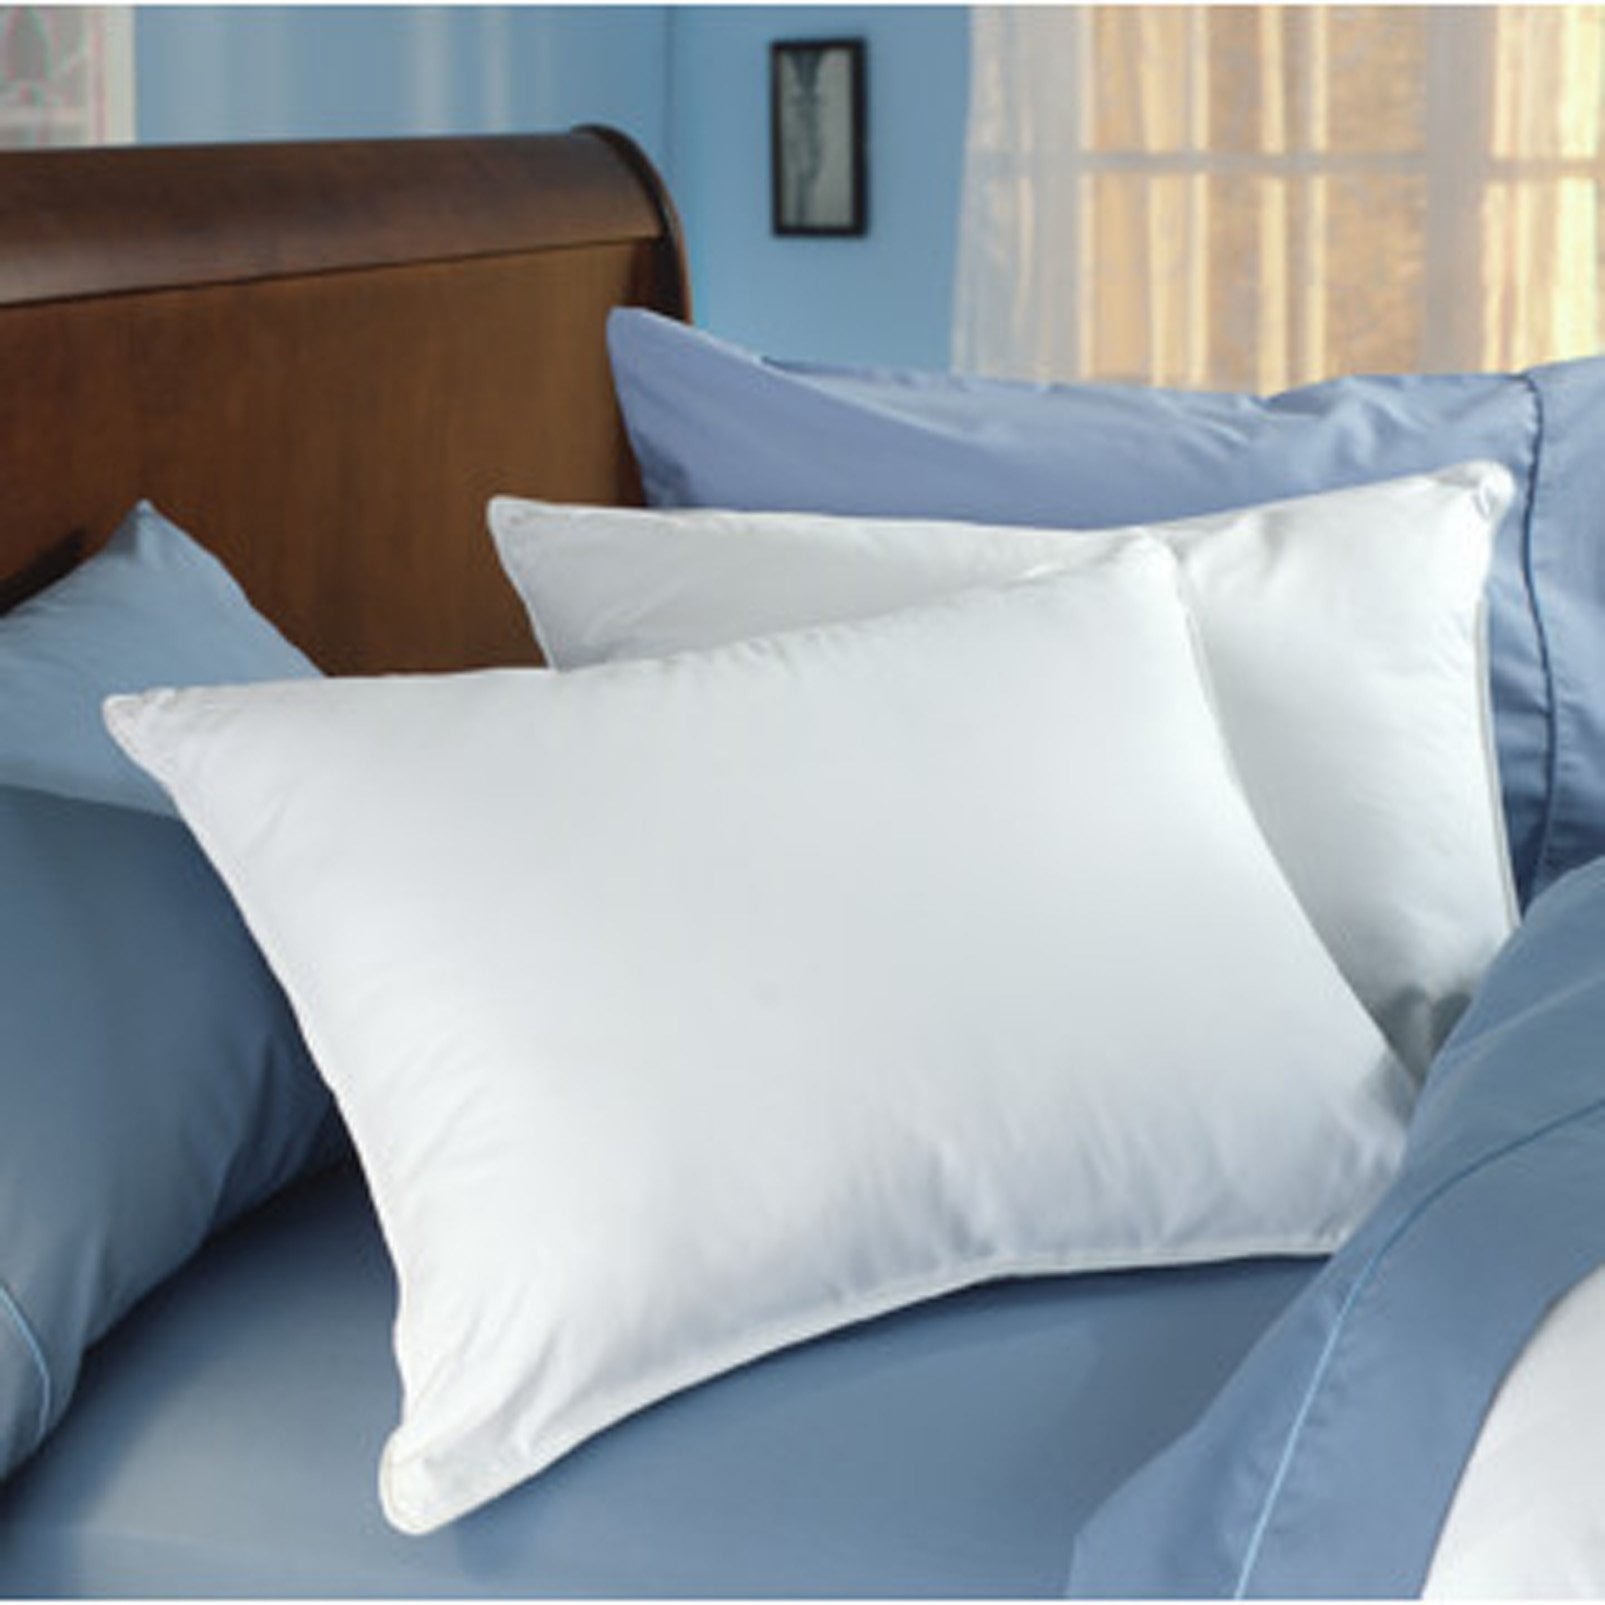 Envirosleep Dream Surrender Firm King Pillow Set of 2 found at Hilton hotels 